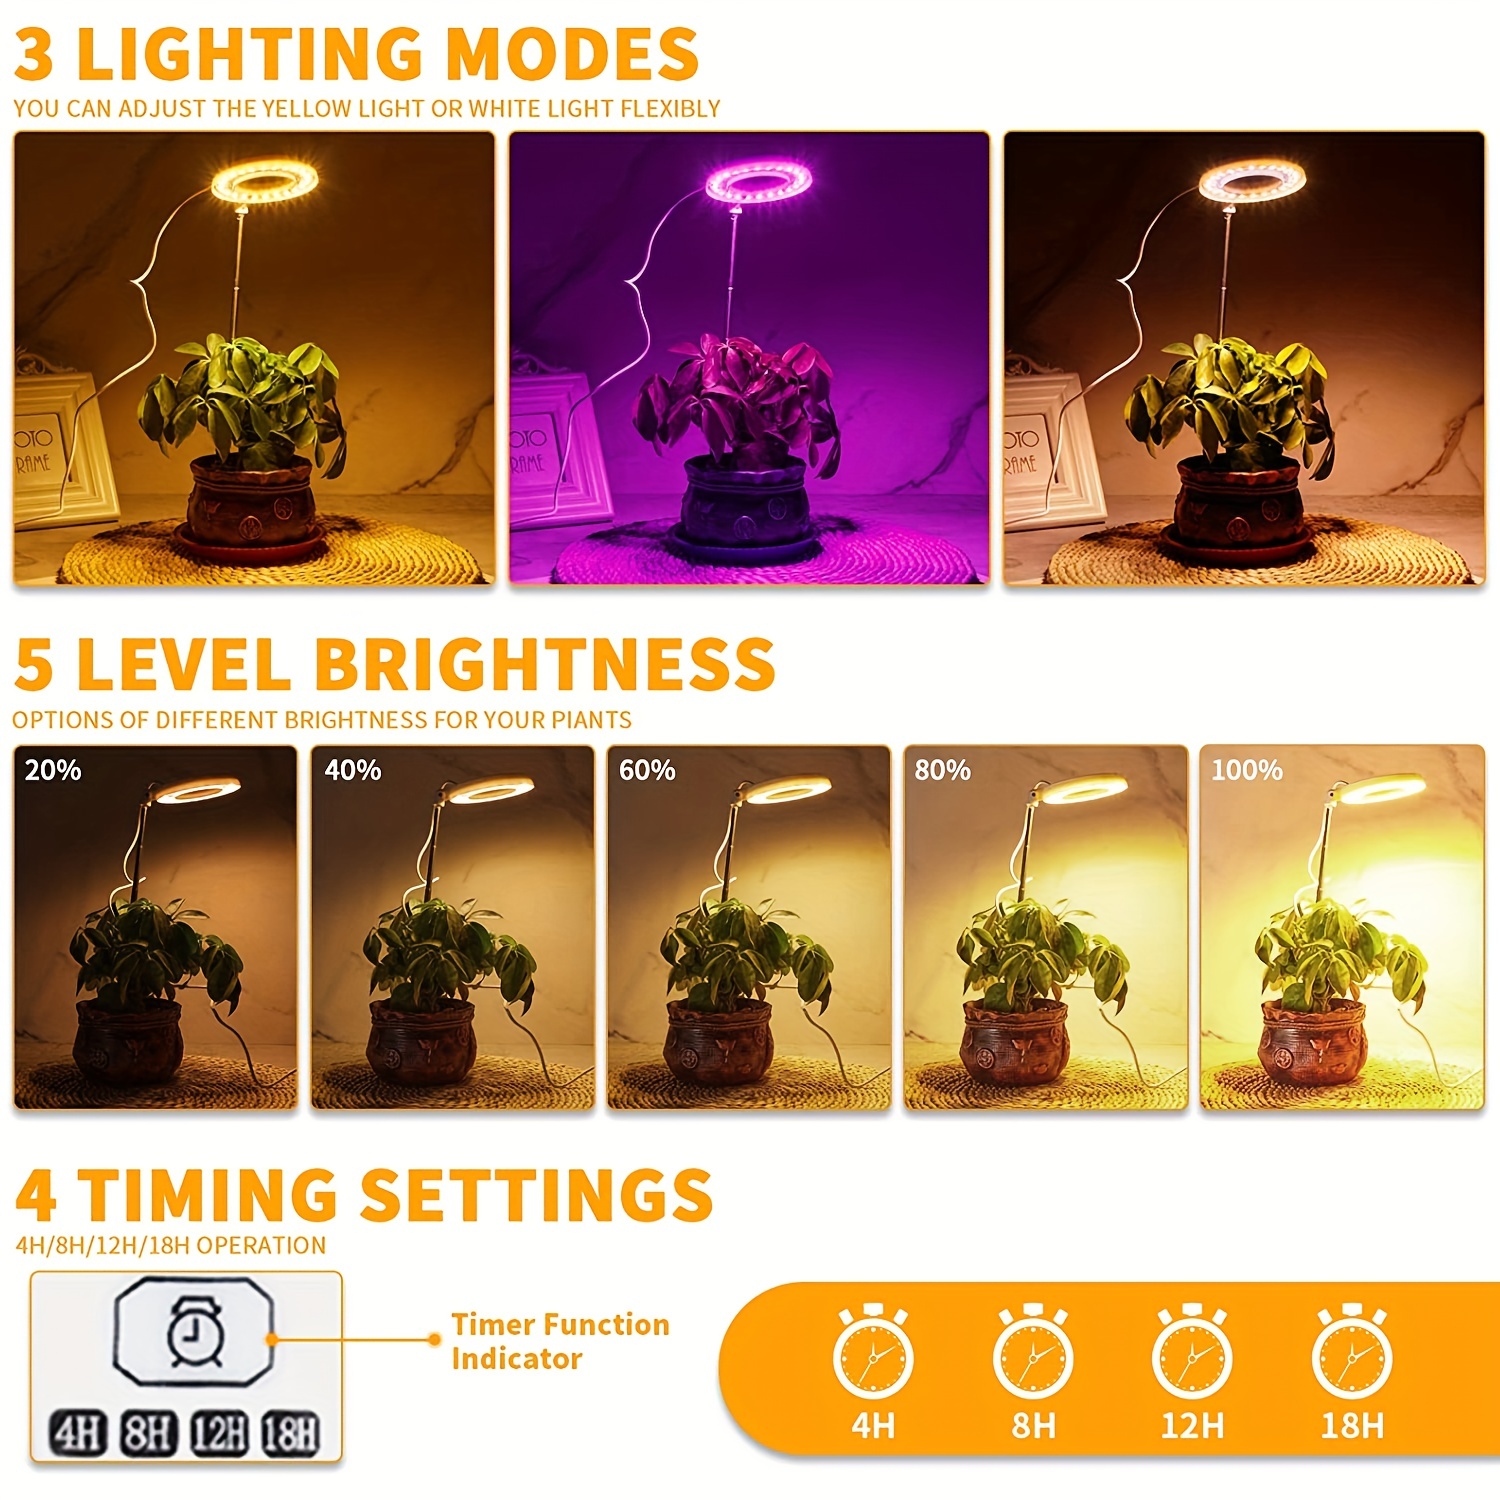 PLAMP, the grow light that looks good – Heroplants